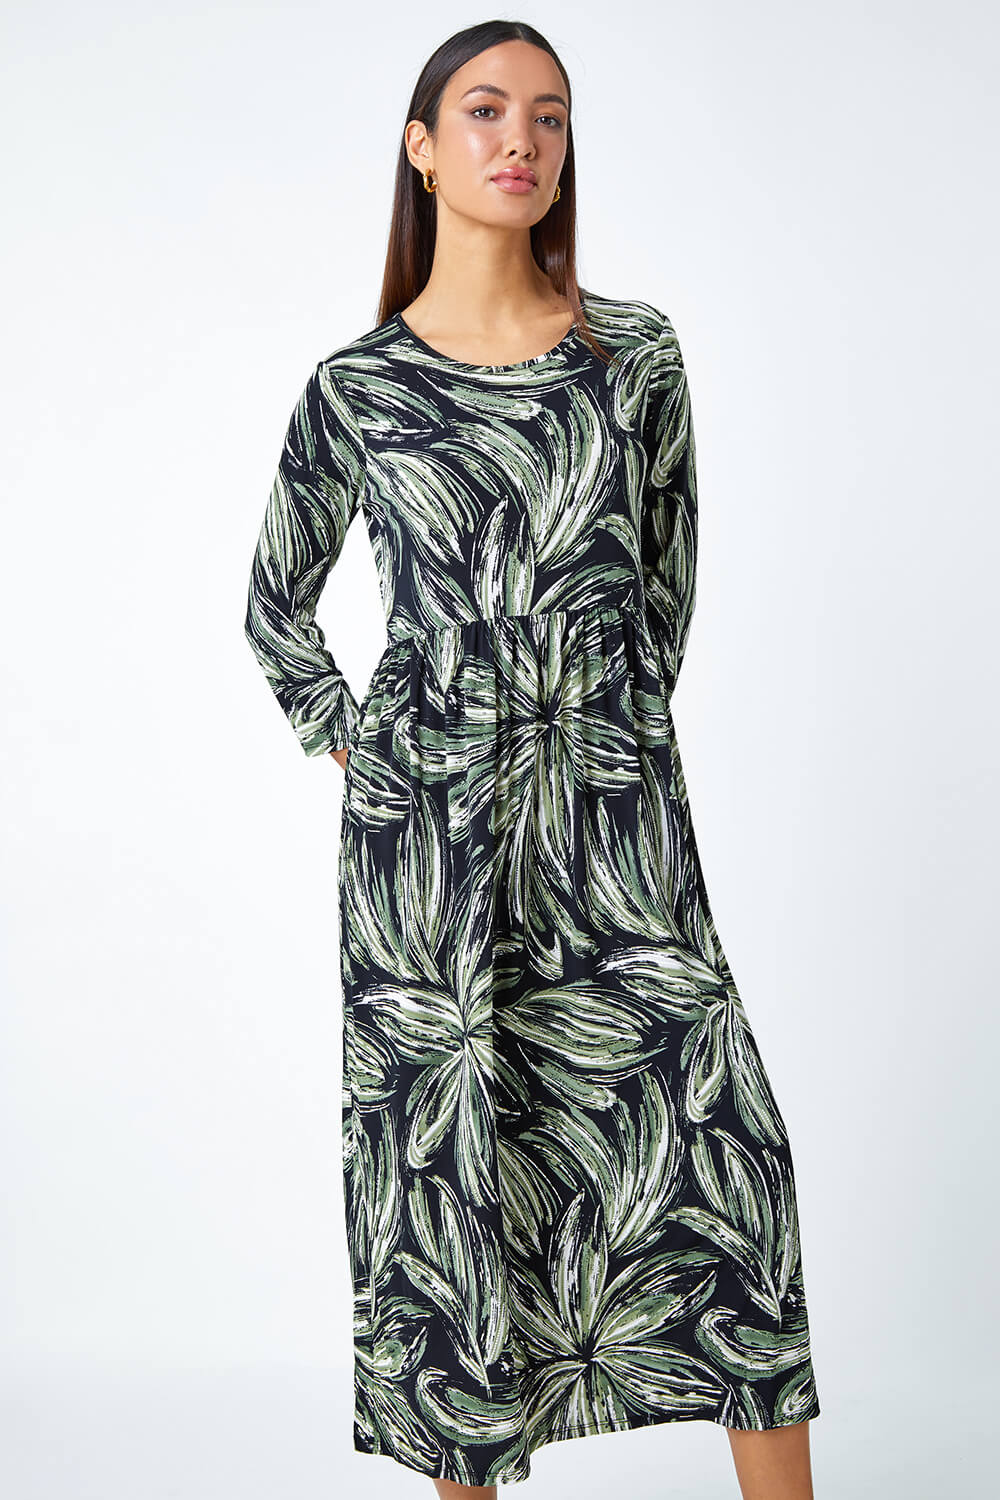 KHAKI Textured Floral Print Midi Stretch Dress, Image 2 of 5